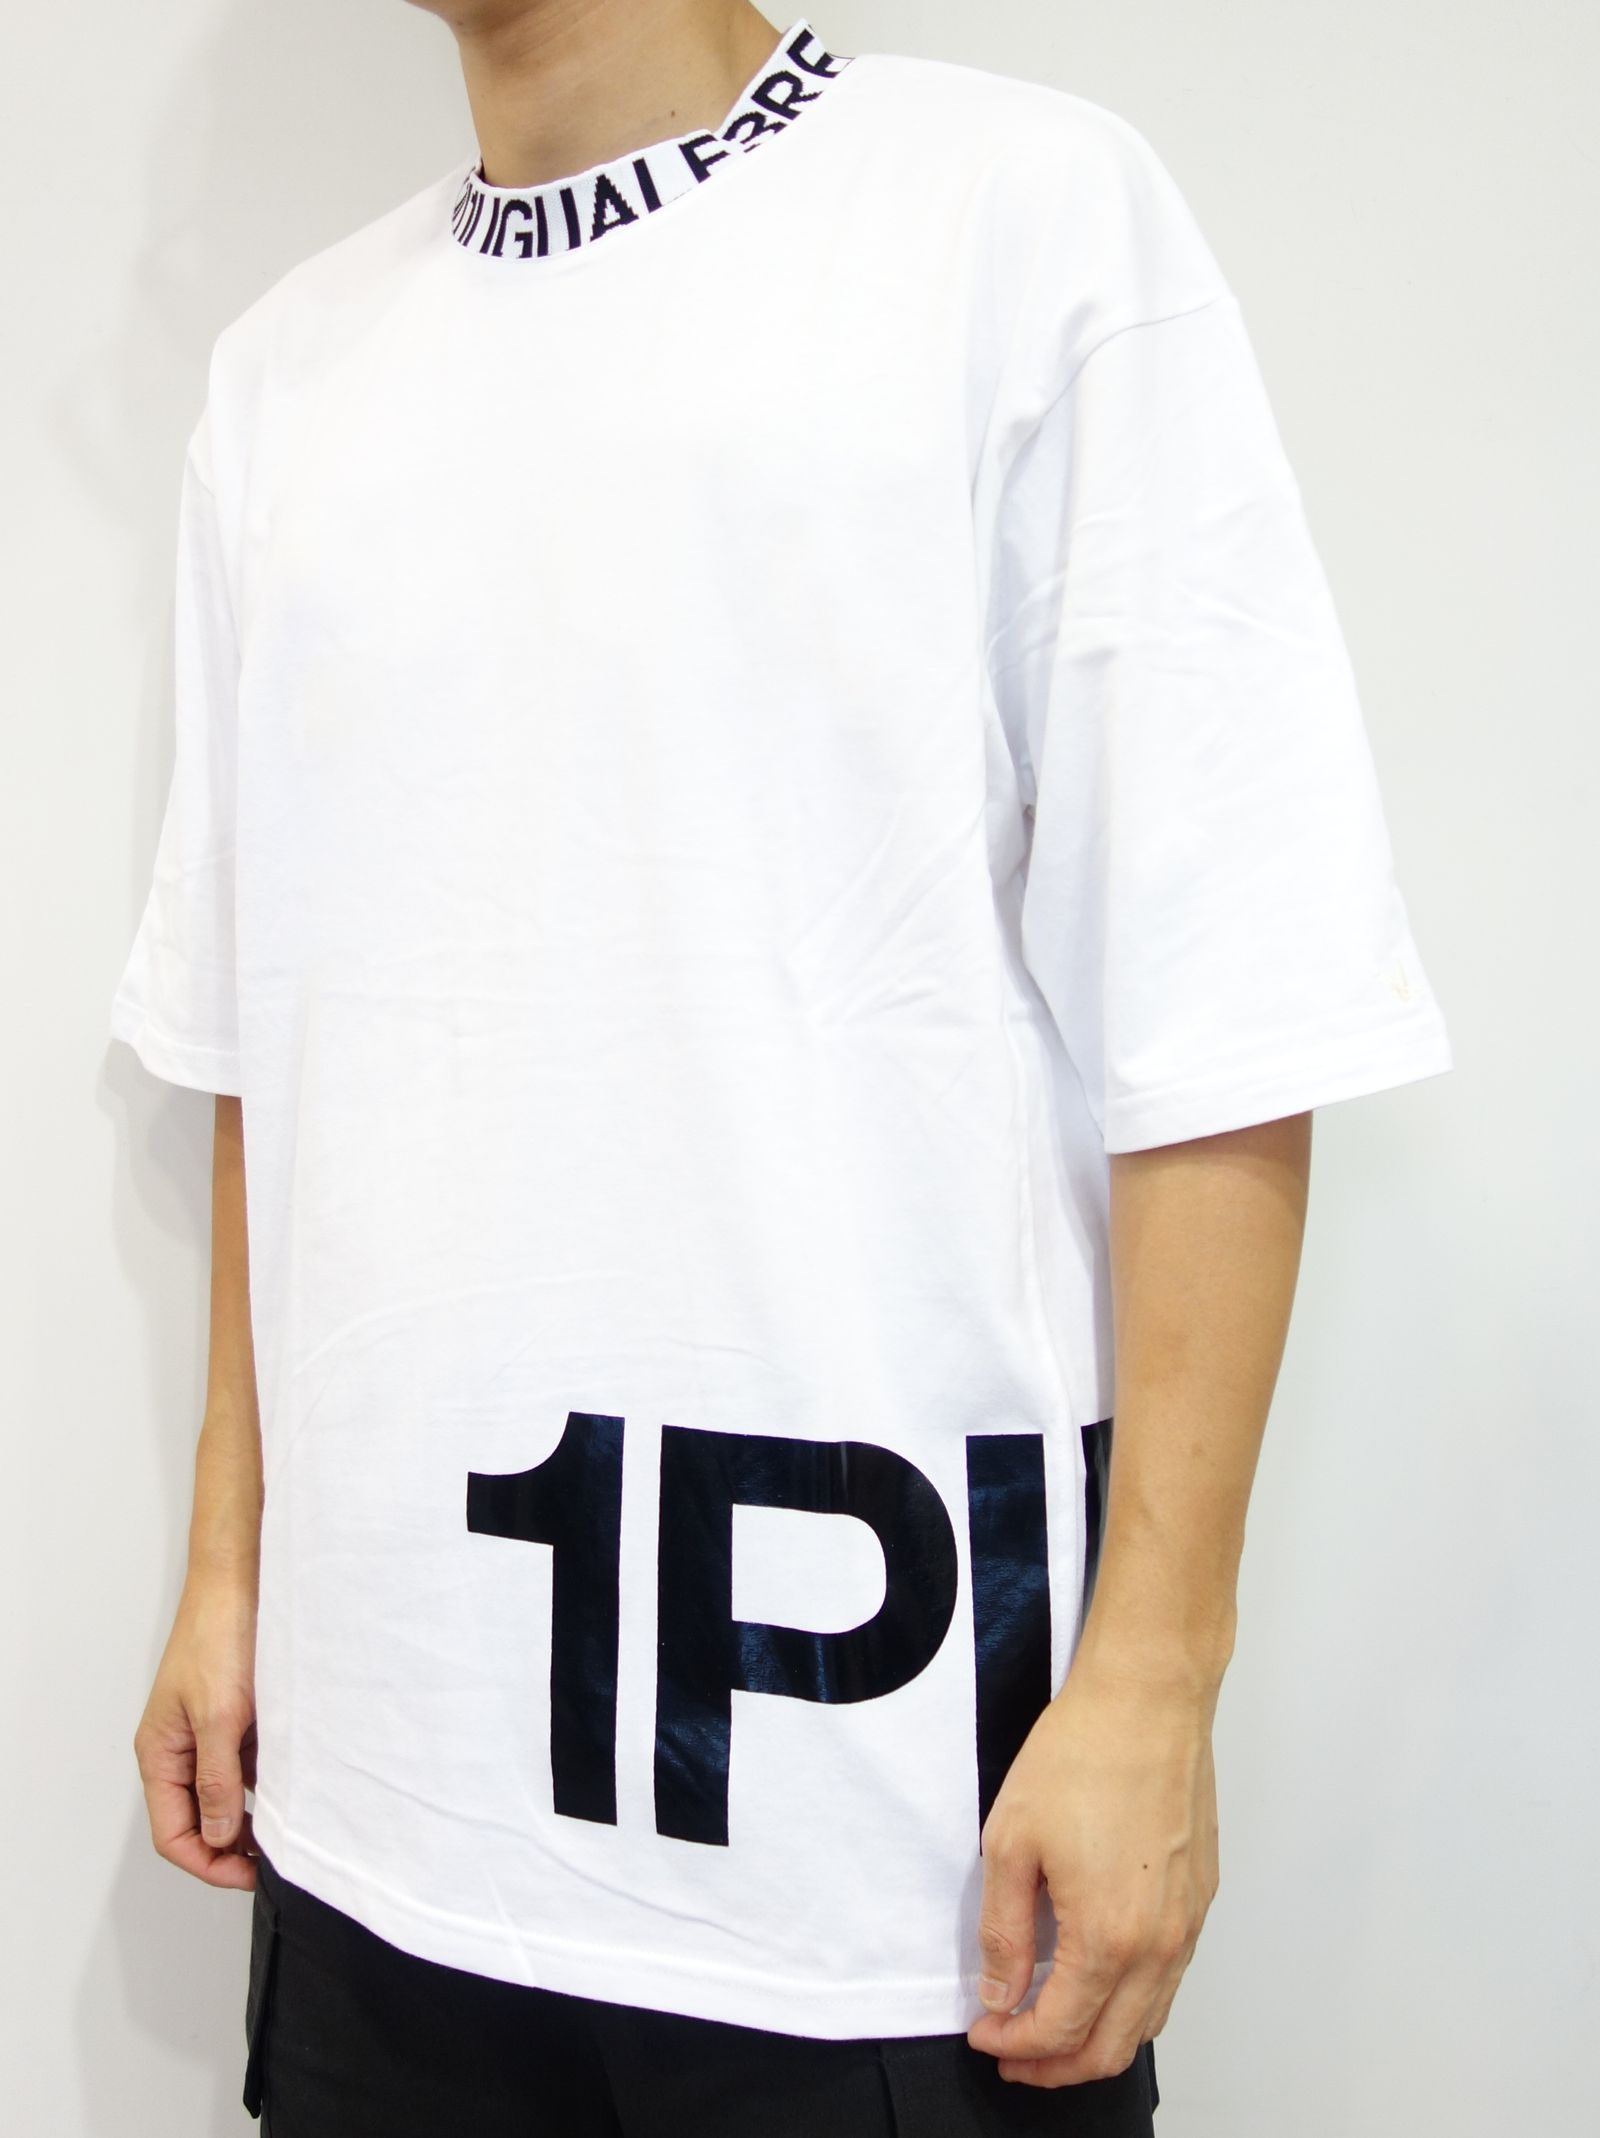 1PIU1UGUALE3 RELAX - ワイドネックロゴ半袖Tシャツ / ust-21042 | LUKE